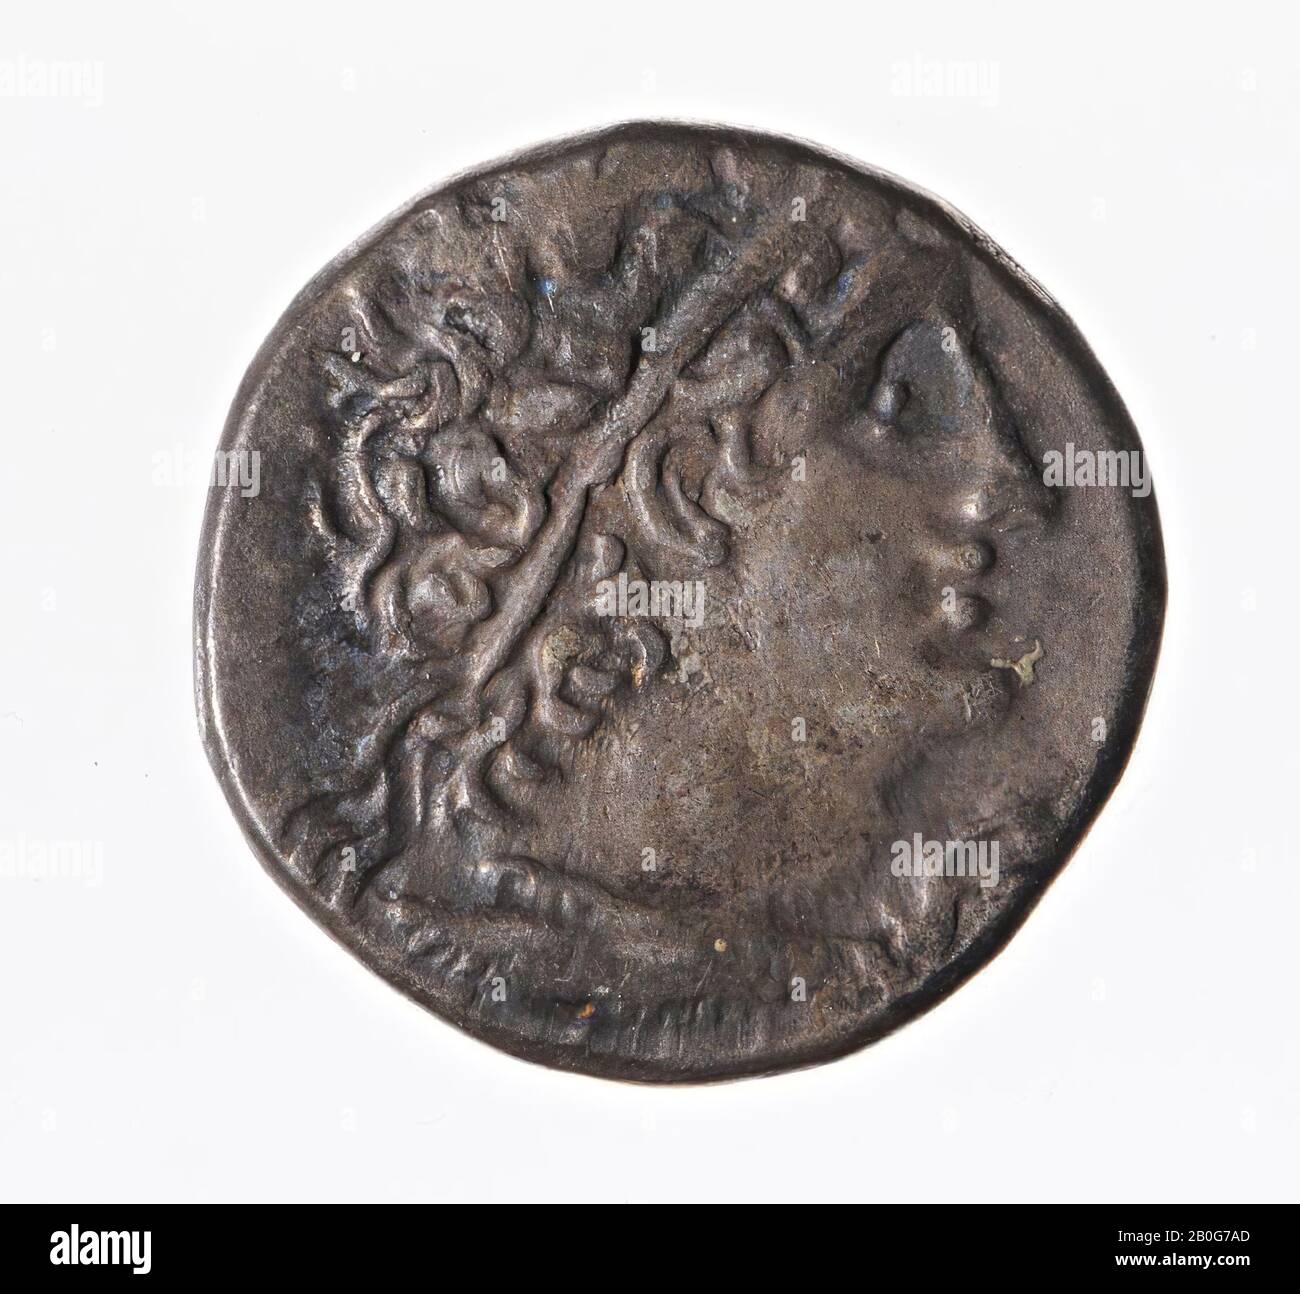 Egypt, coin, tetradrachm, Kleopatra III, Ptolemy XI, metal, silver, Diam., 24 mm, wt., 13.16 gr, Greco-Roman Period, Ptolemaic Period BC 105, Egypt Stock Photo